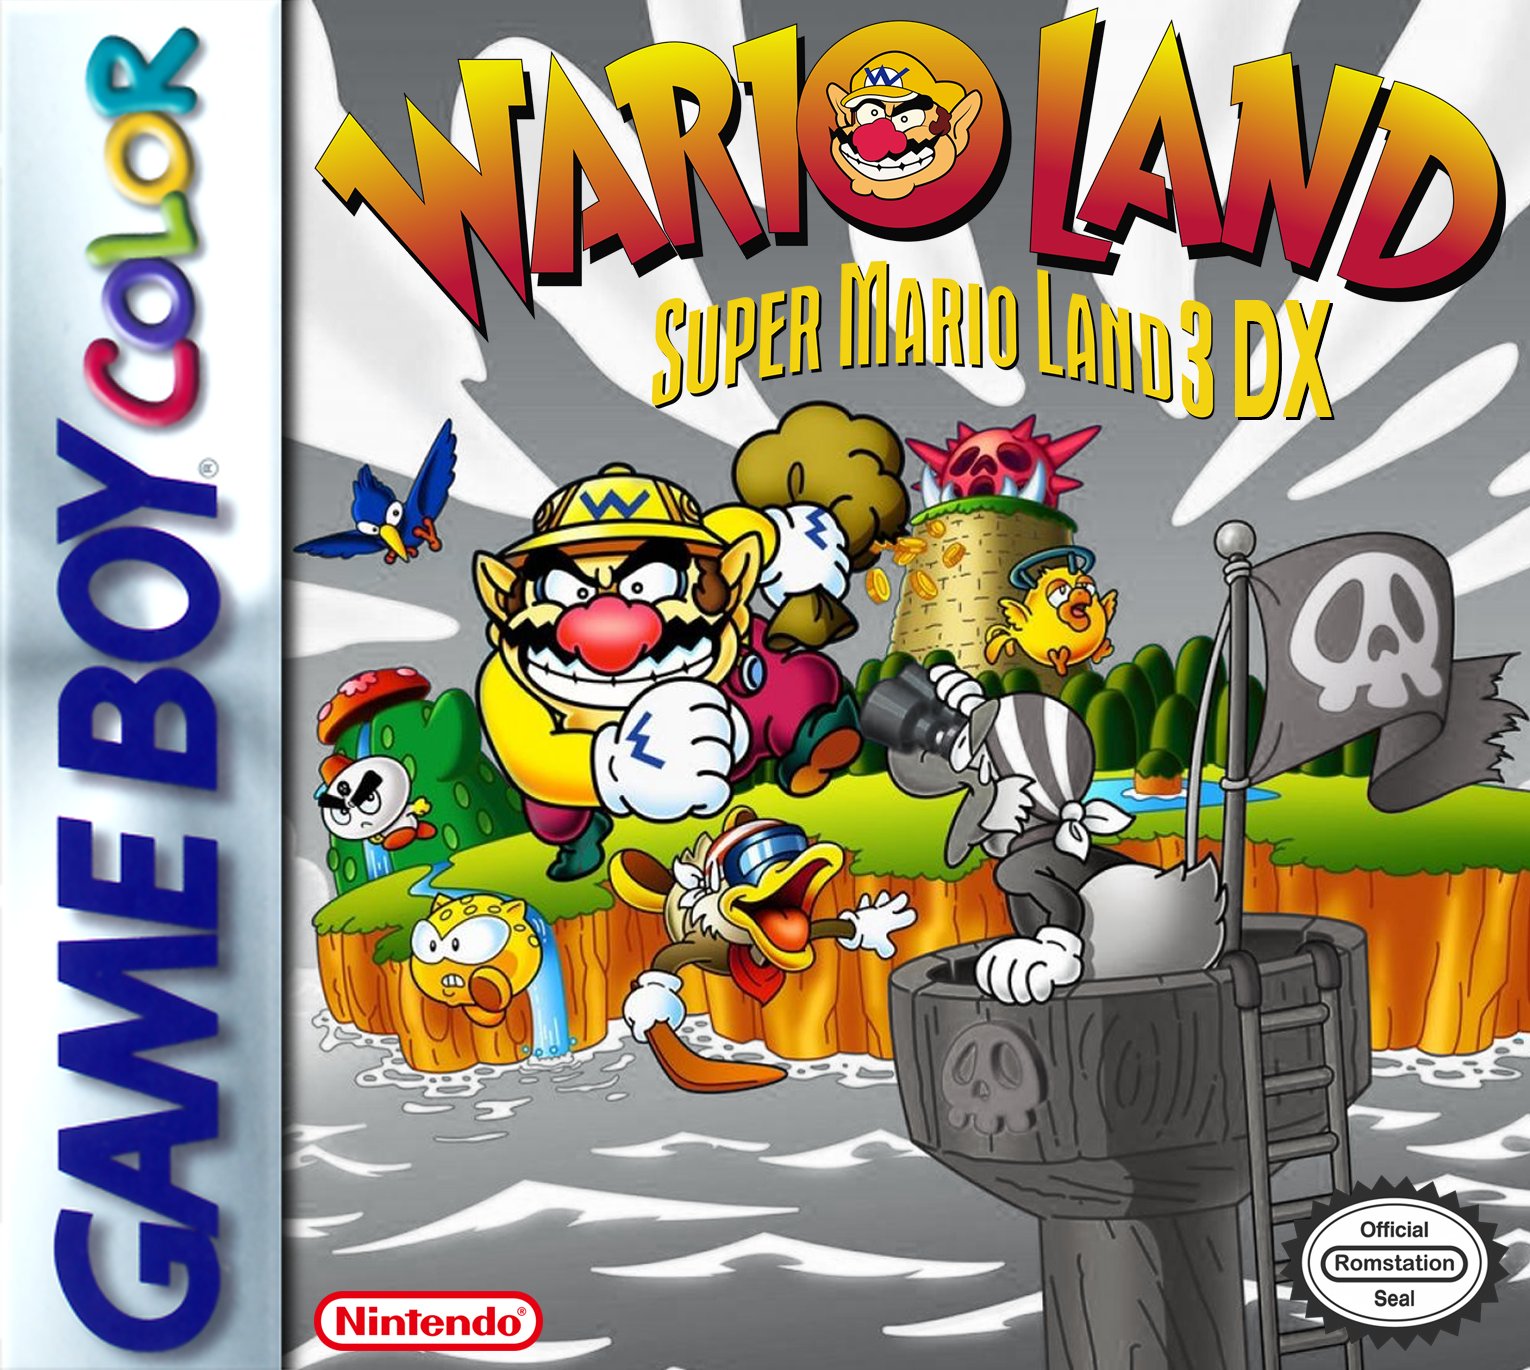 Wario Land Super Mario Land 3 DX (GameBoy Color) RomStation